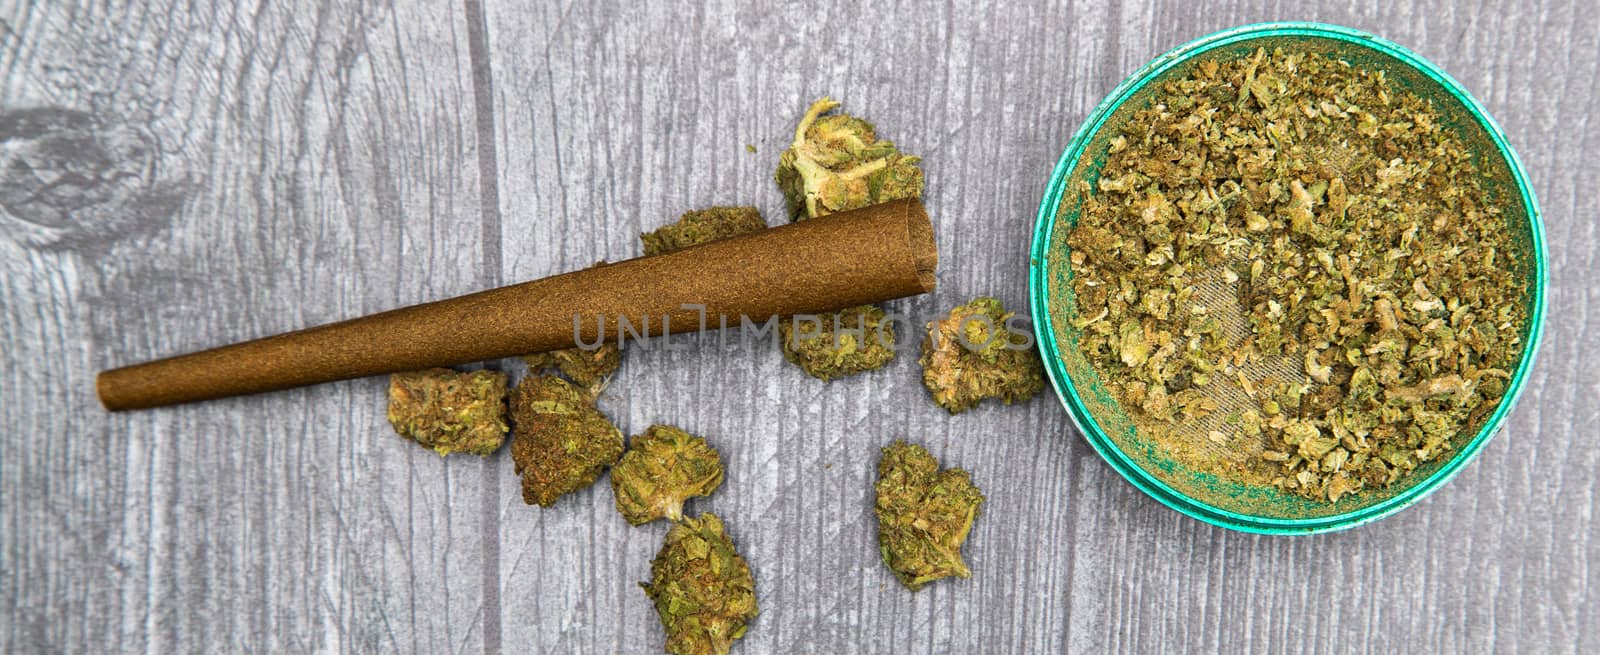 Preparing to Roll Medical Marijuana Buds by kreativepics